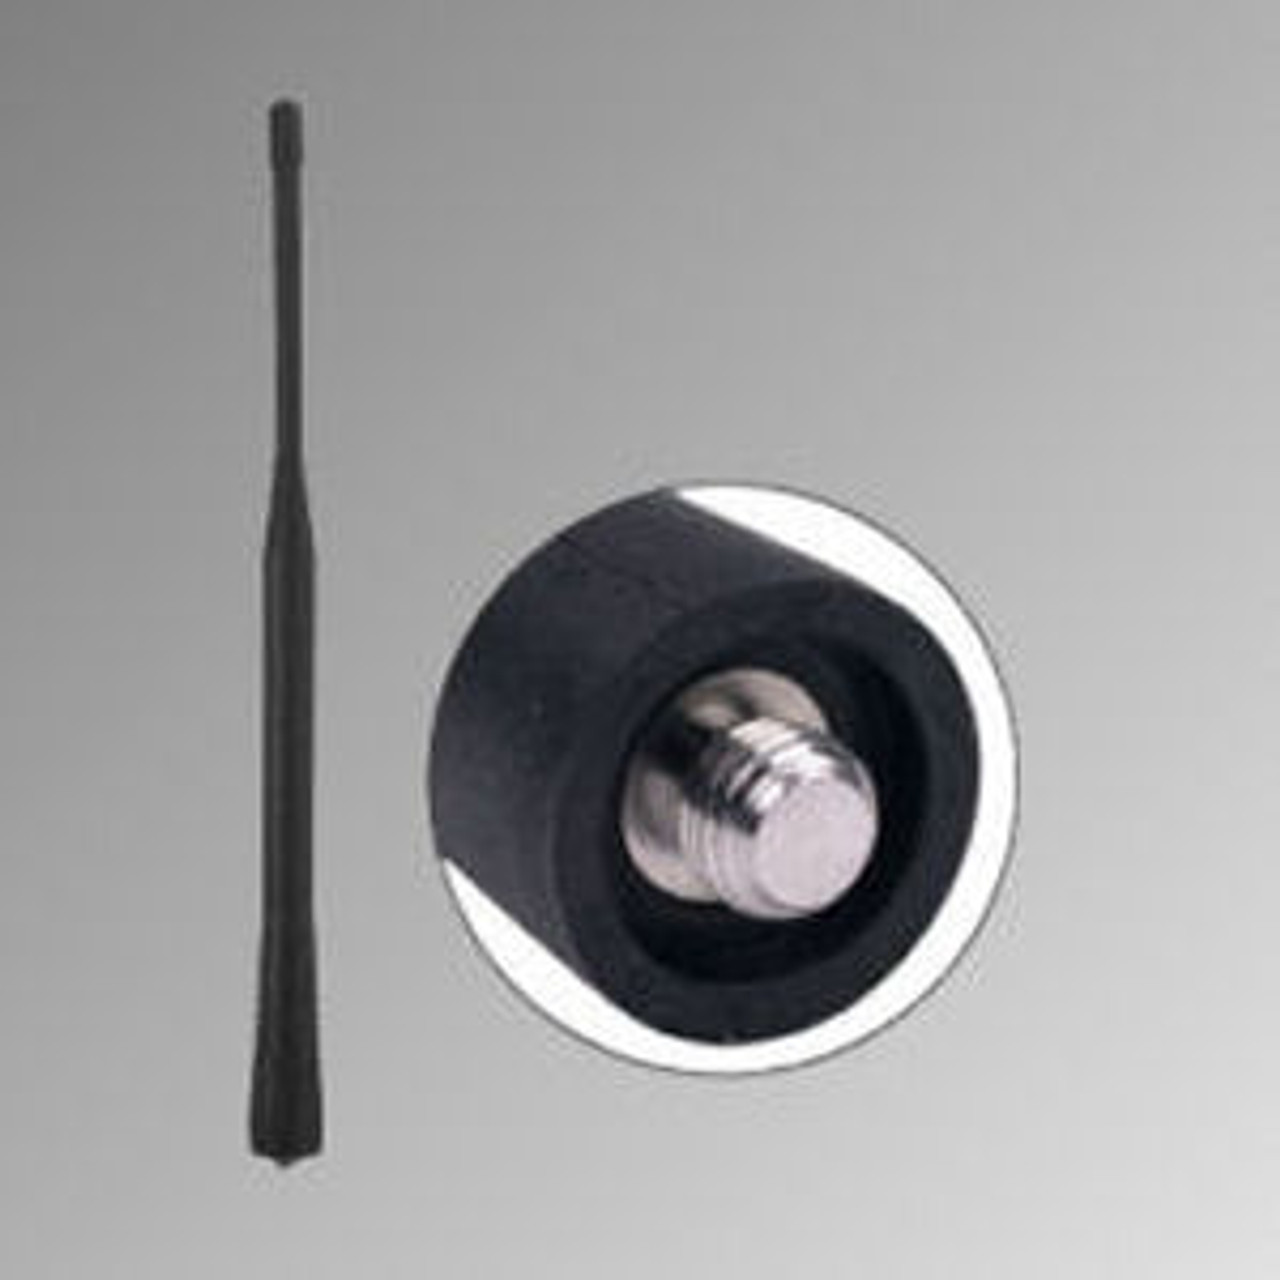 ICOM IC-F3G Long Range Antenna - 10.5", VHF, 155-165 MHz